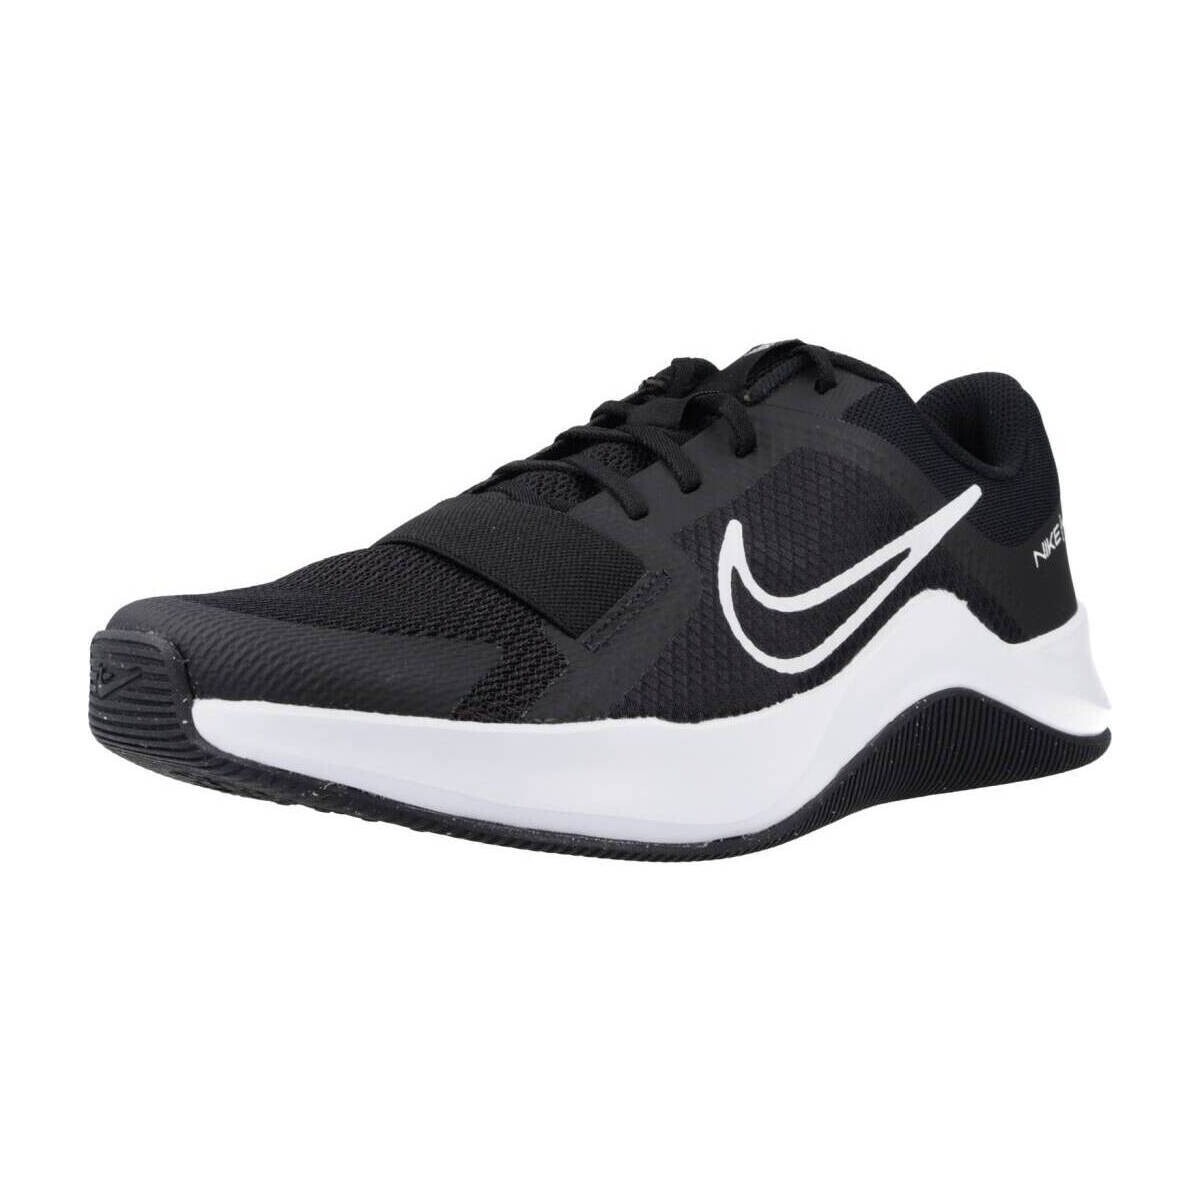 Topánky Muž Módne tenisky Nike MC TRAINER 2 Čierna